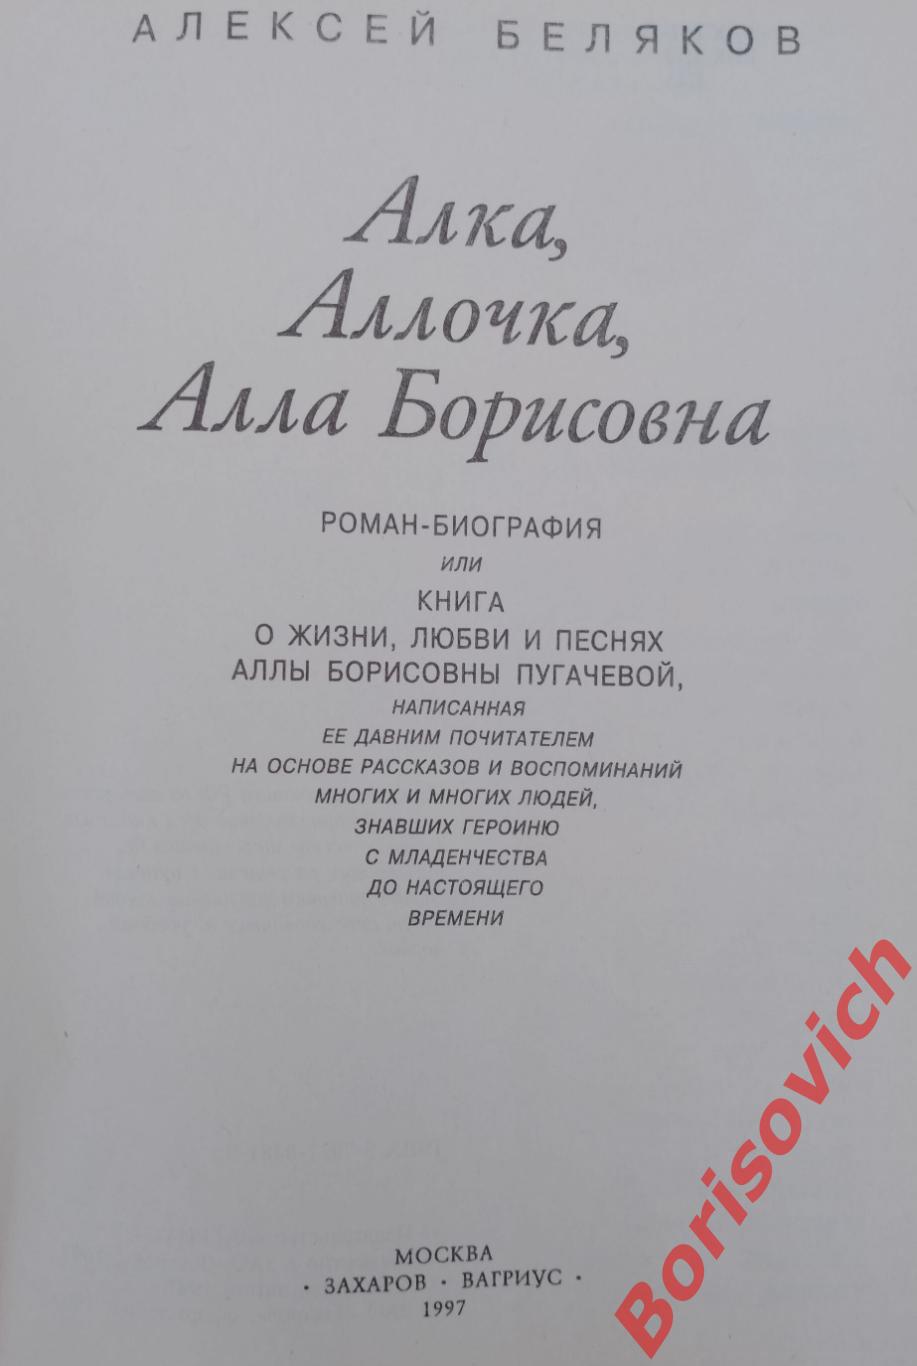 АЛКА, АЛЛОЧКА, АЛЛА БОРИСОВНА ПУГАЧЁВА Роман-биогоафия 1997 г 352 стр 1